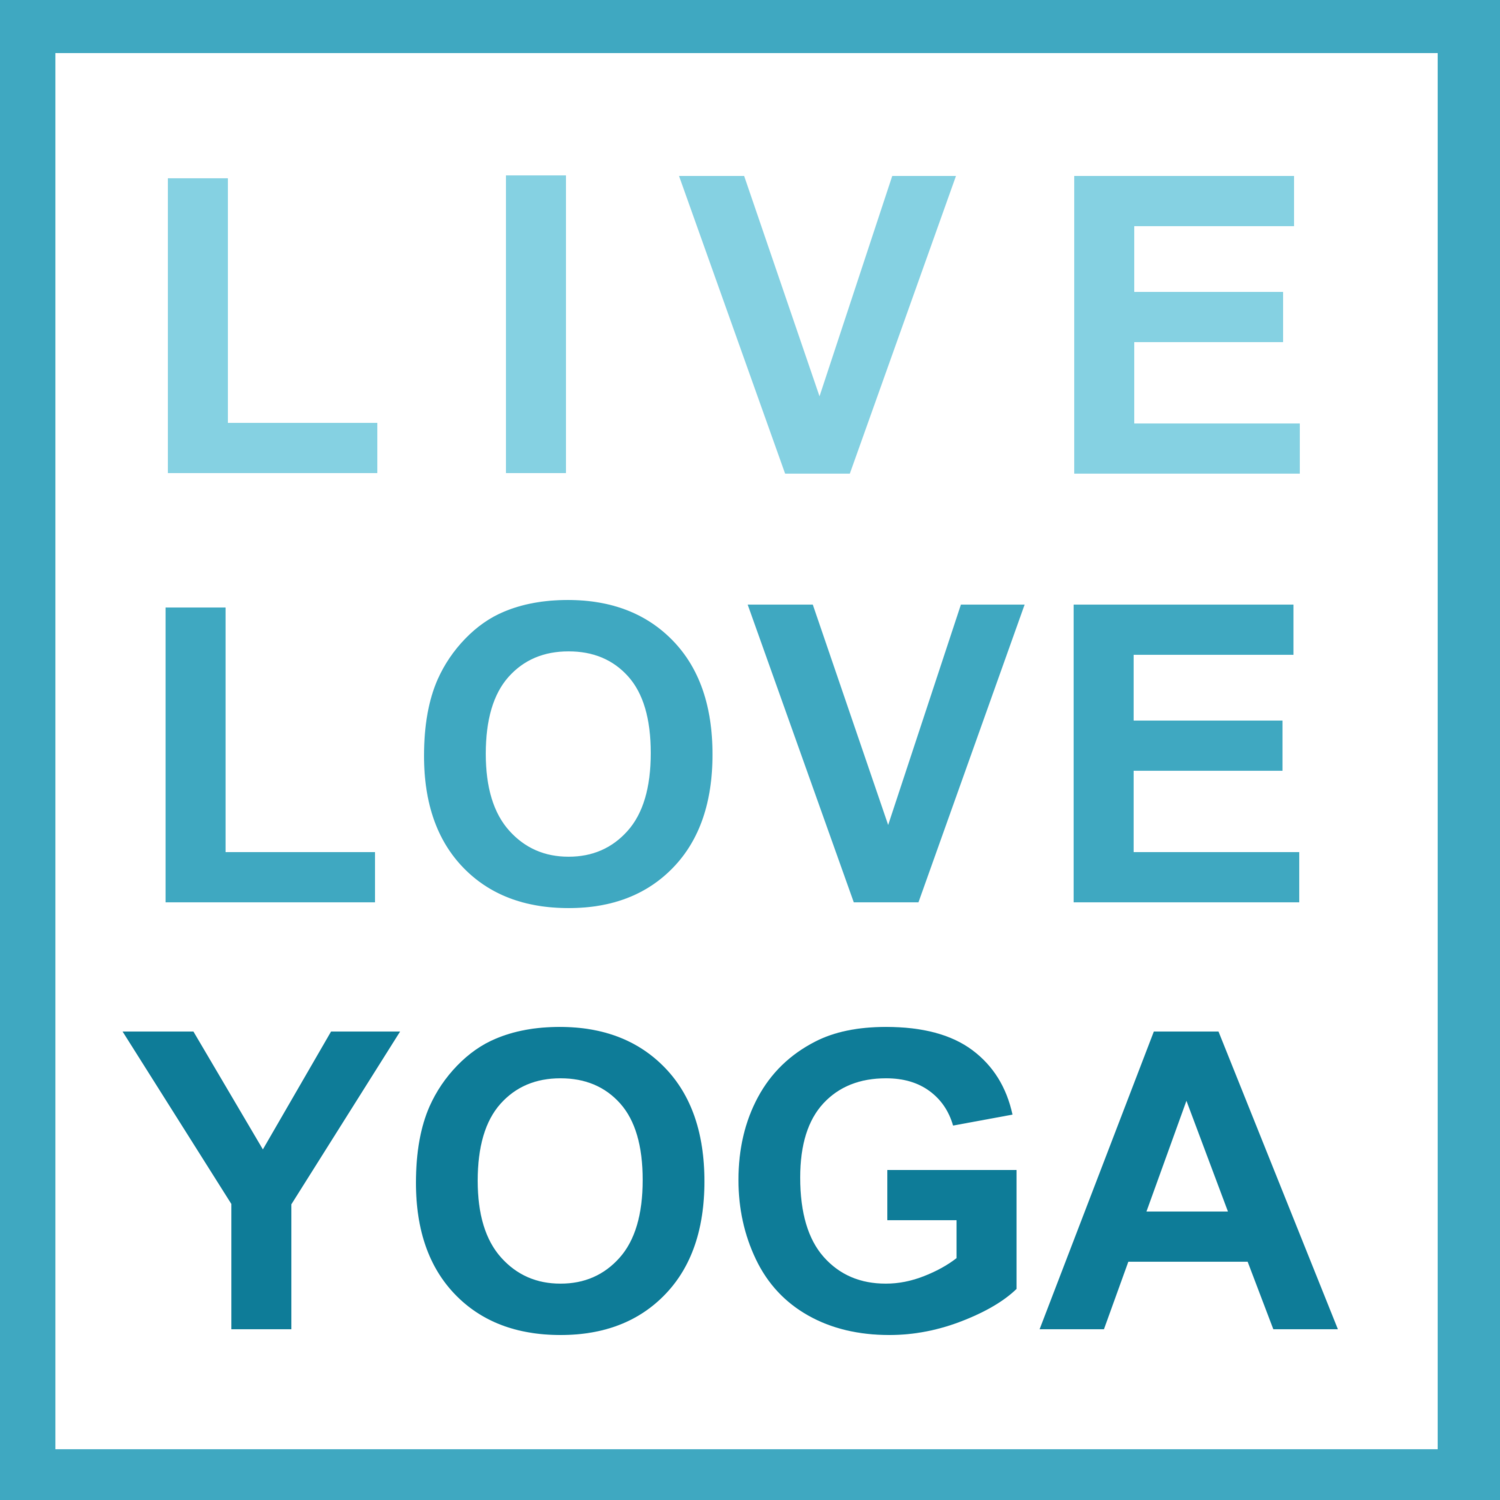 Live Love Yoga - Yoga Classes & Training in Sussex & online